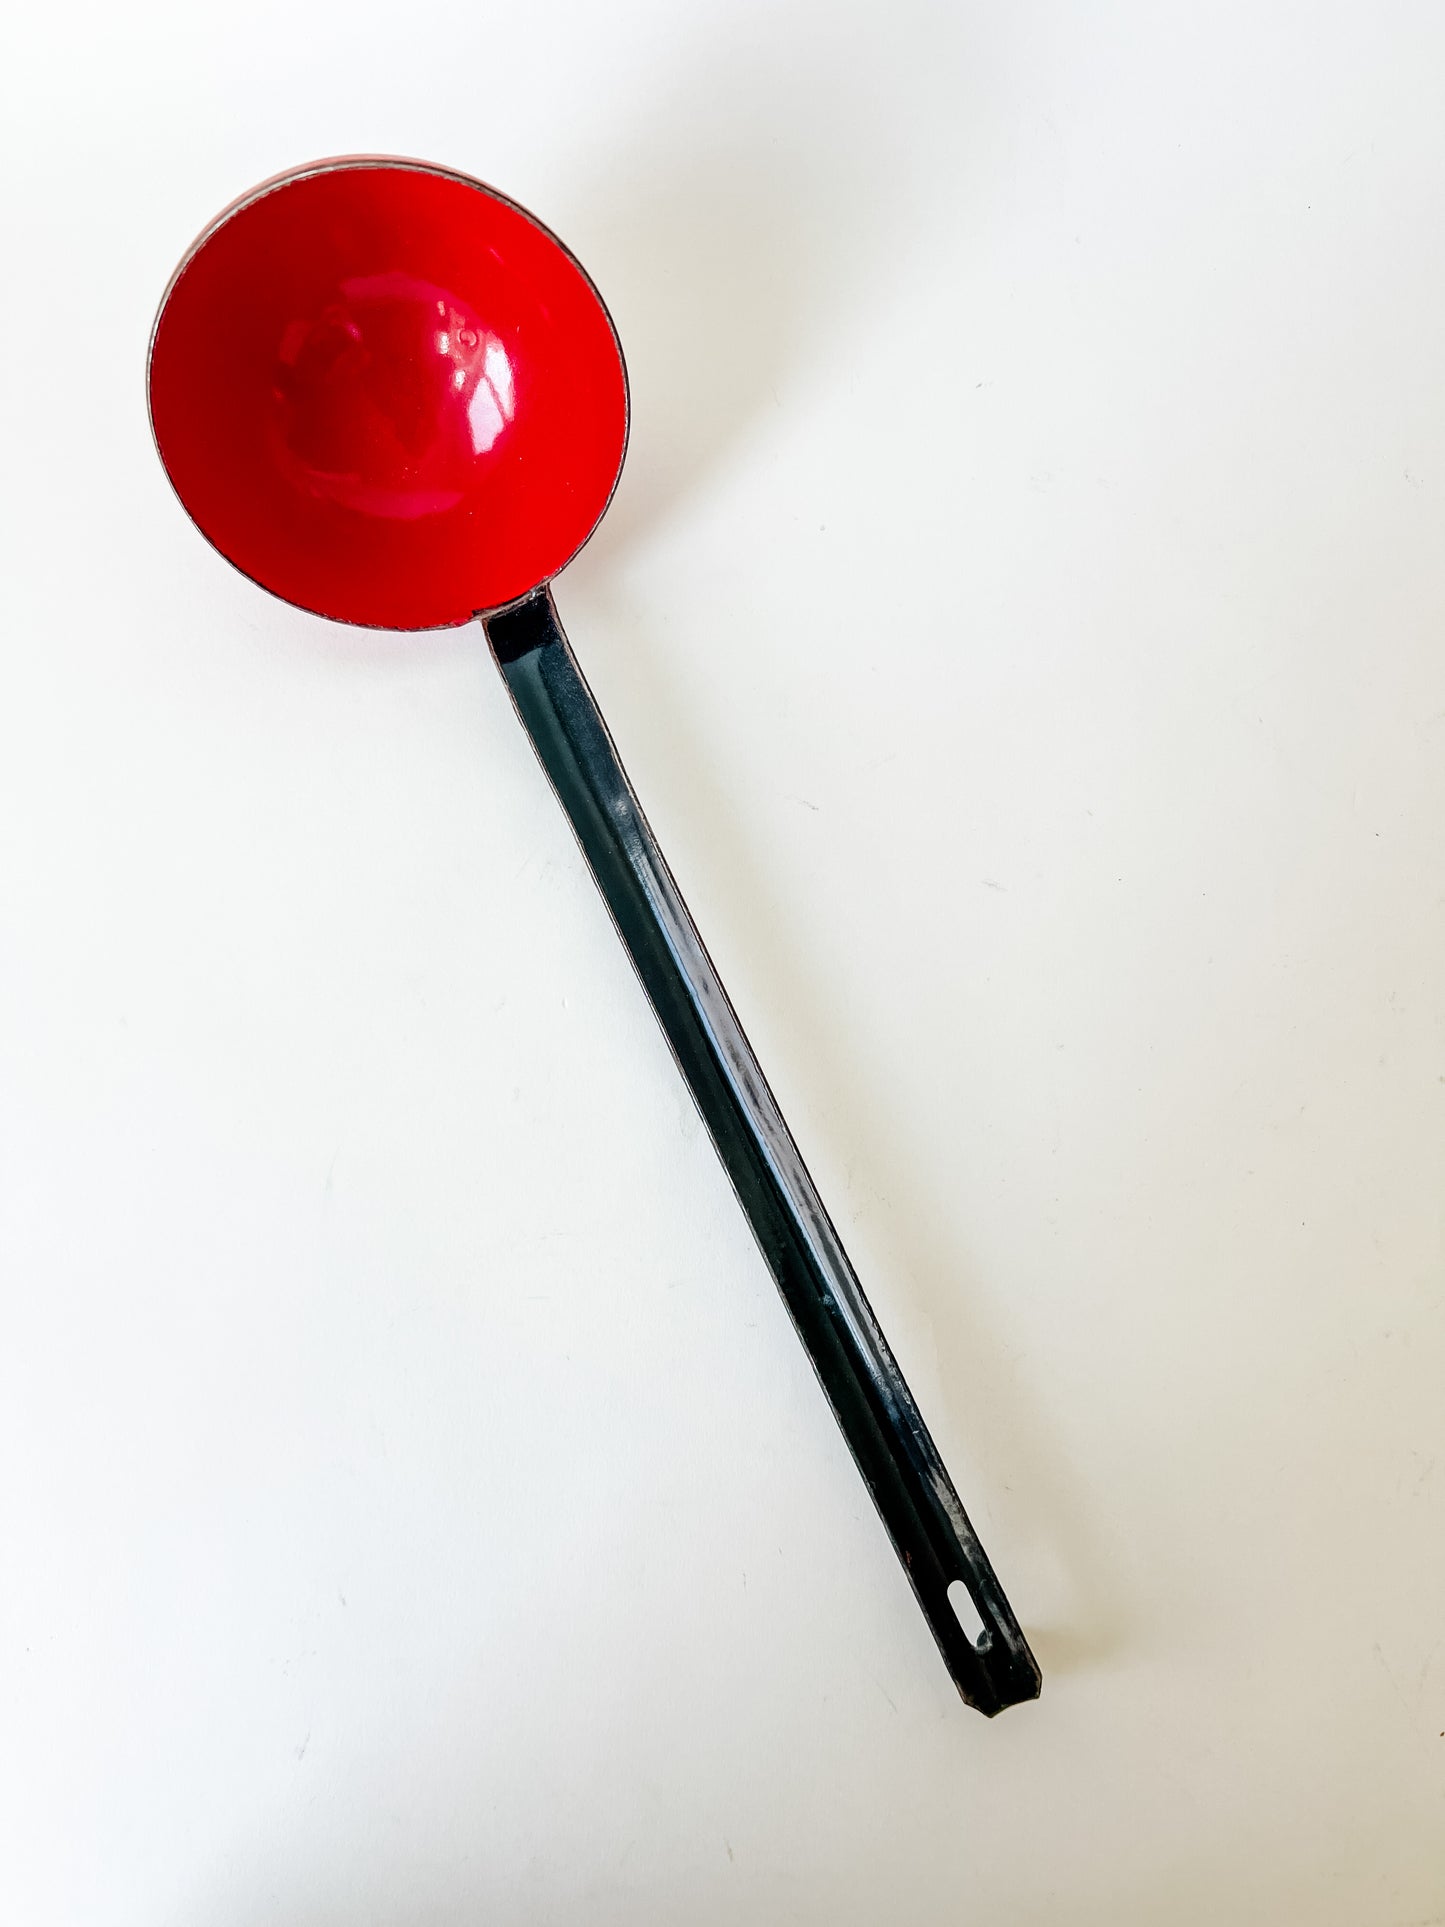 Vintage French Enamel Ladle (black handle and red ladle)